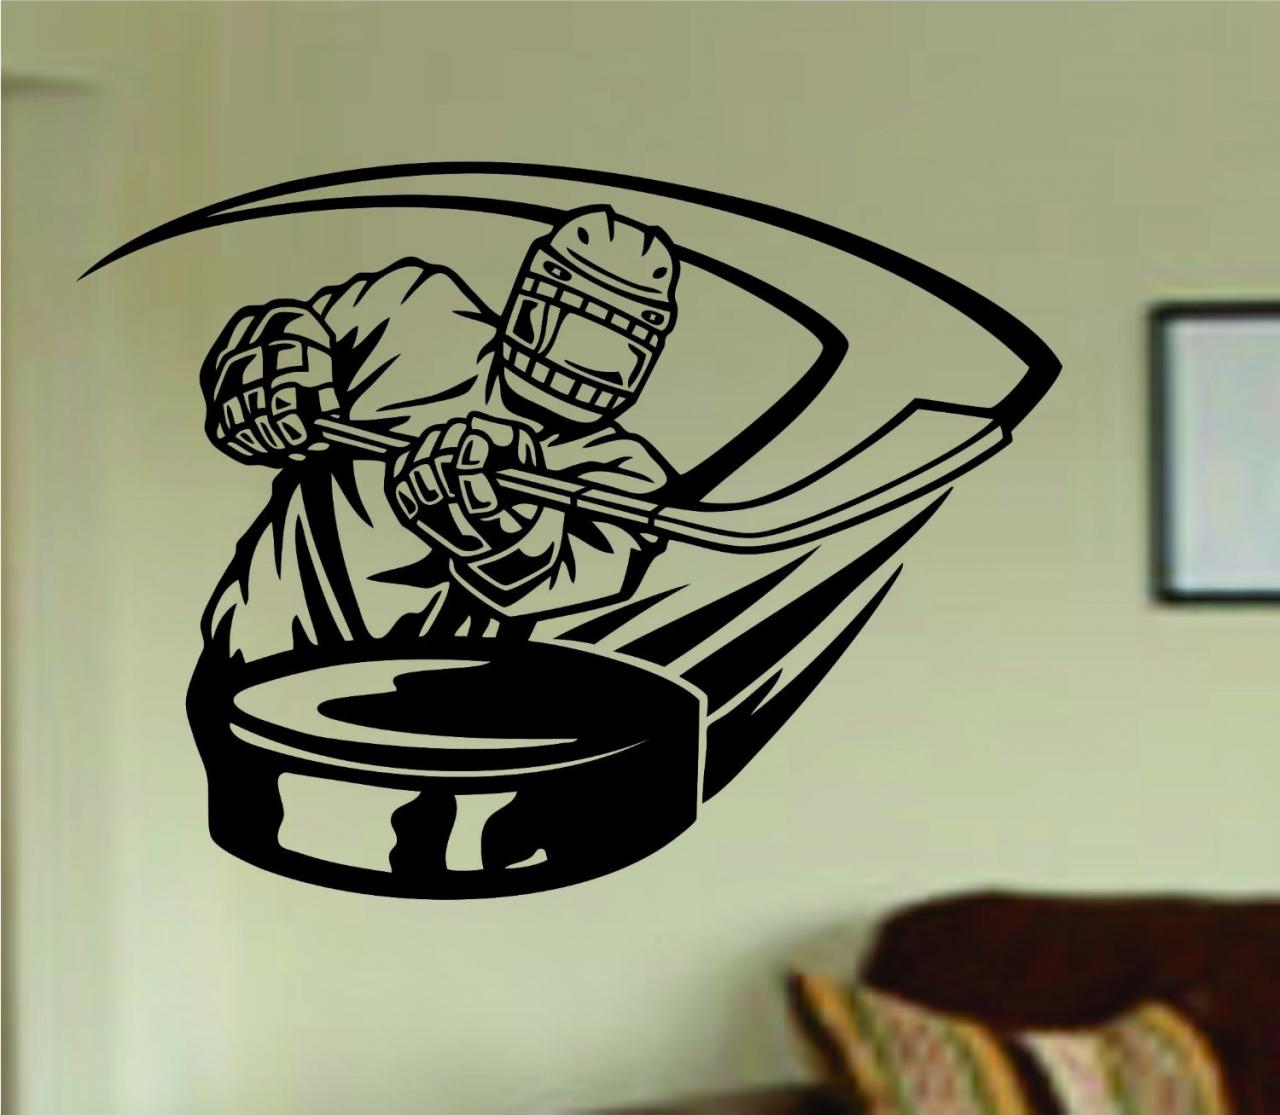 Ice Hockey Player Shooting Puck Vinyl Wall Decal Sticker Art Sports Kid Children